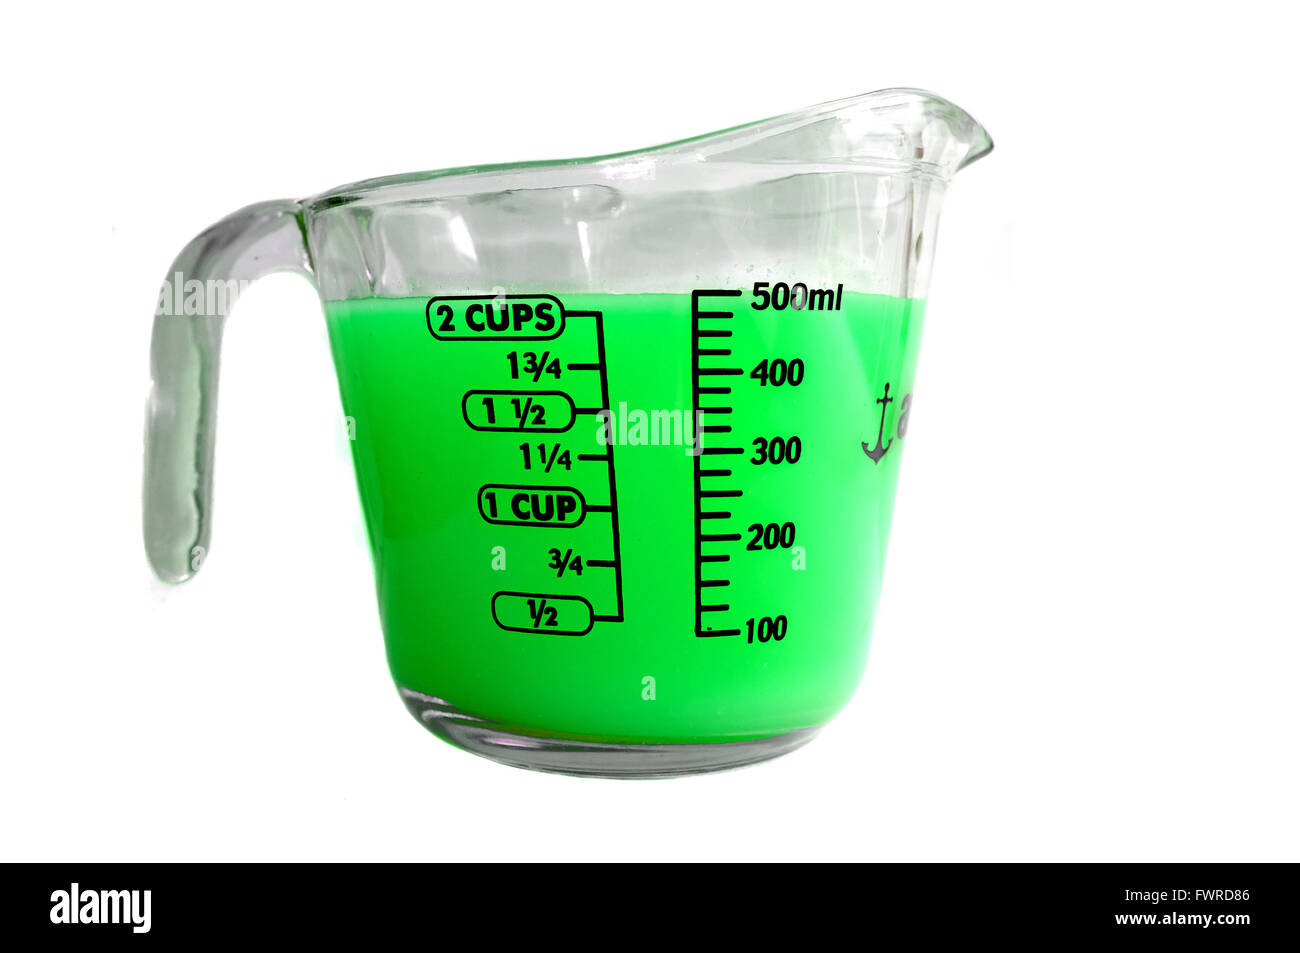 https://c8.alamy.com/comp/FWRD86/a-pyrex-measuring-jug-full-of-green-coloured-liquid-photographed-against-FWRD86.jpg